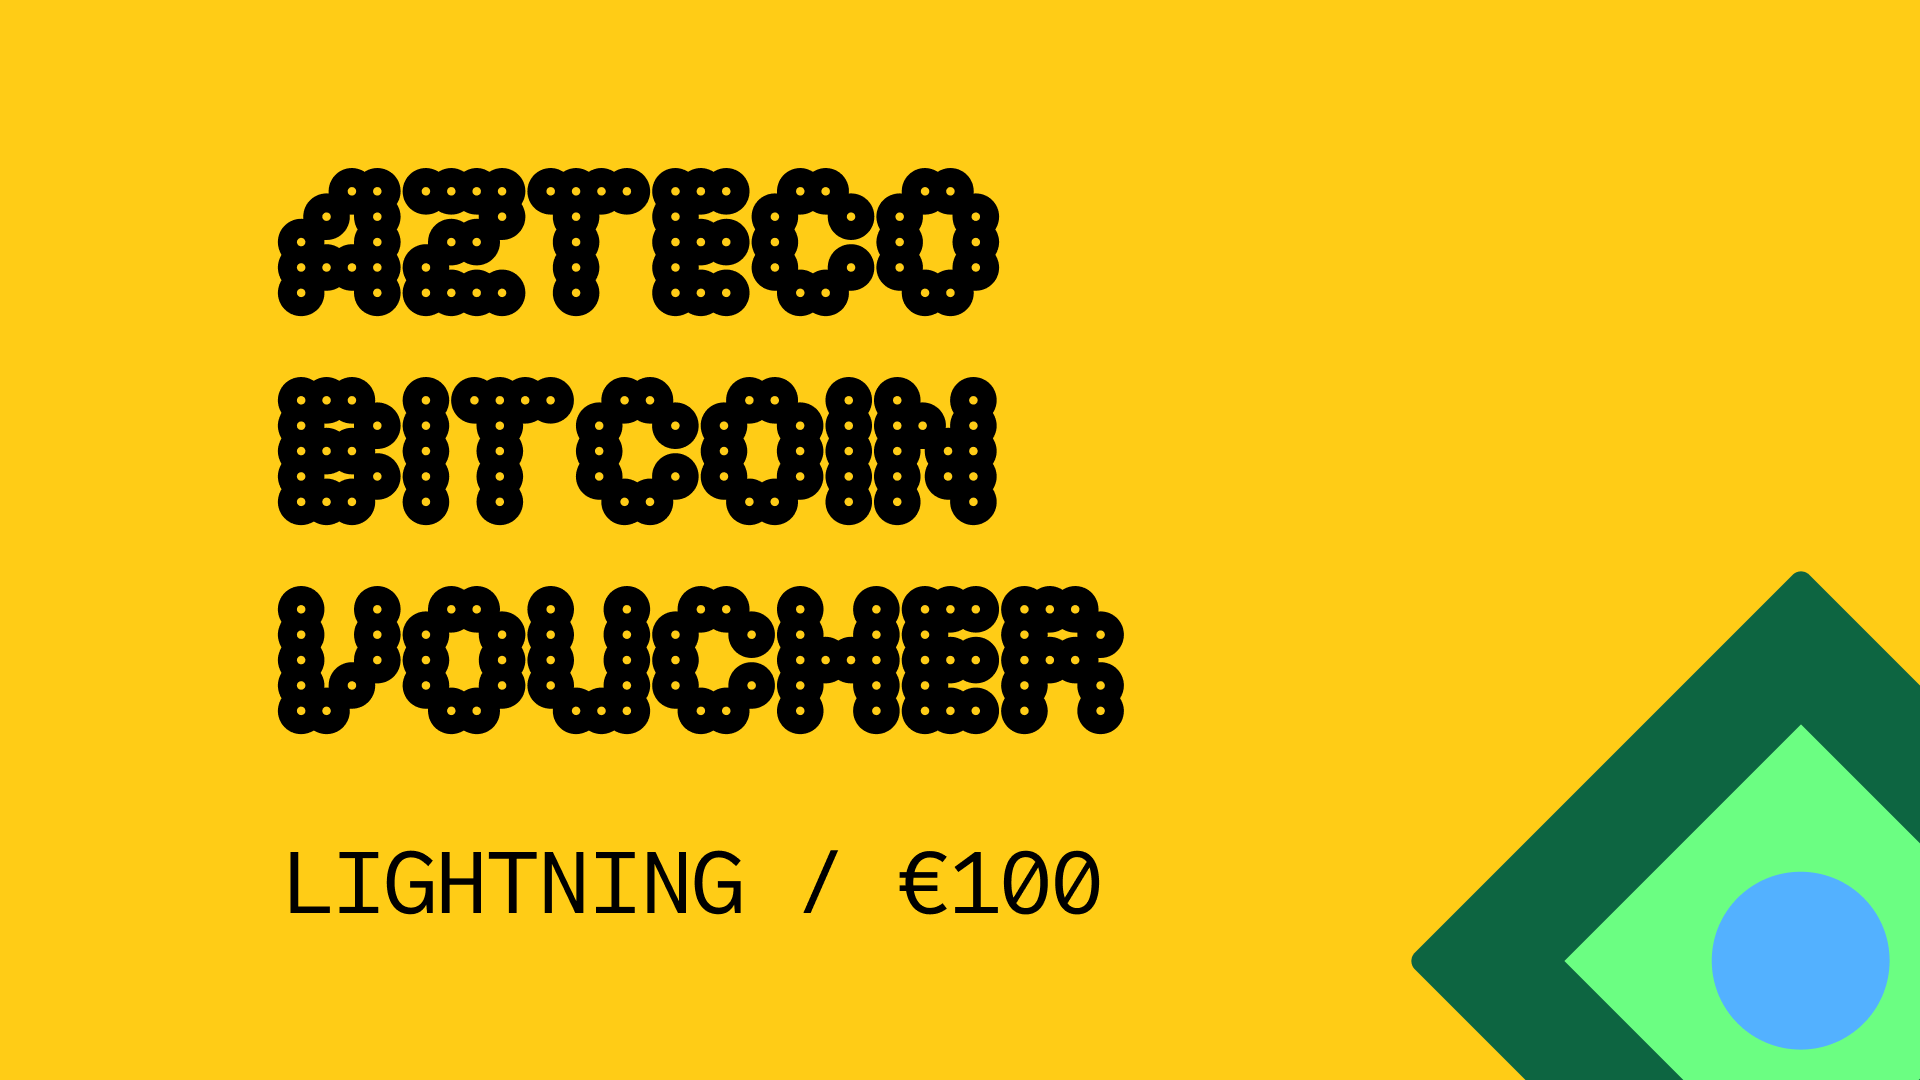 Azteco Bitcoin Lighting €100 Voucher 112.98$